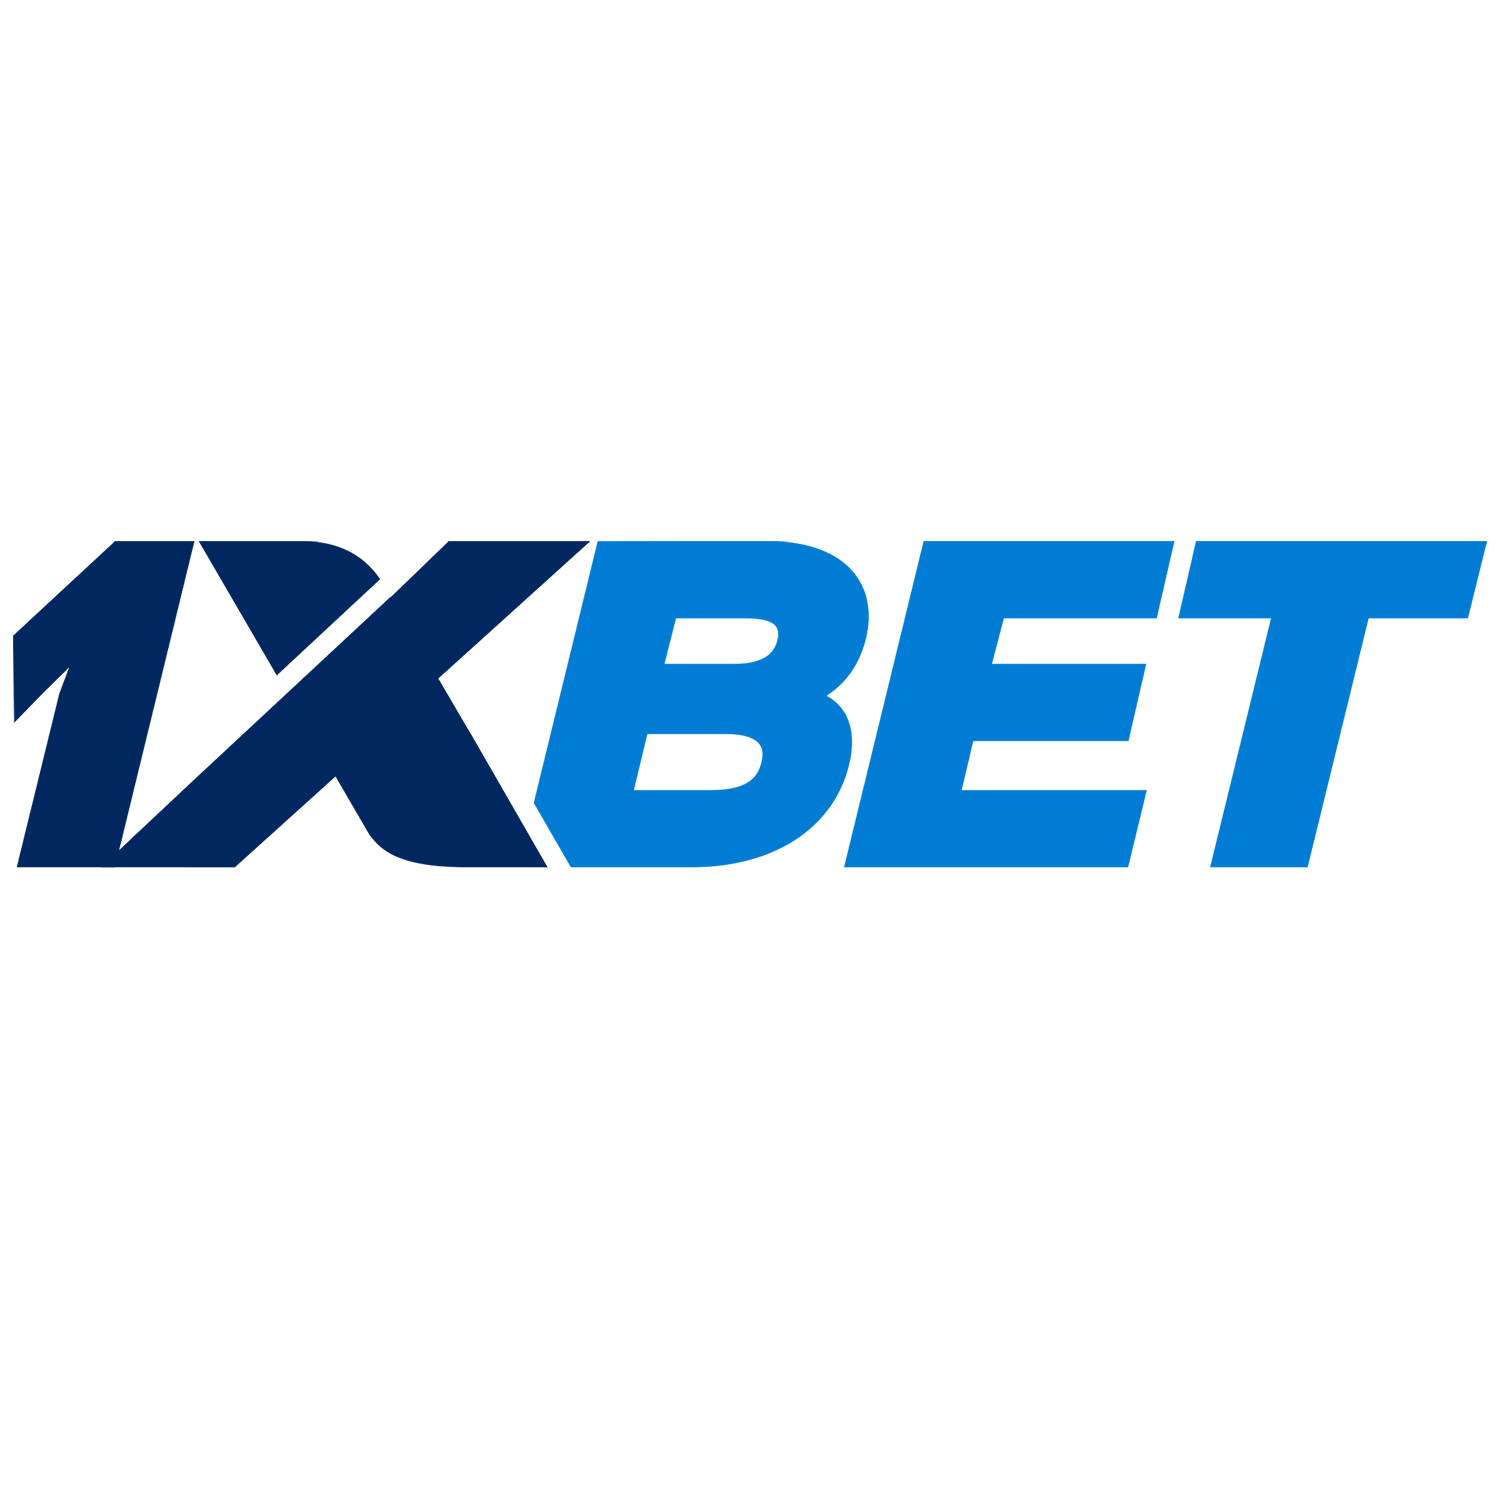 1xBet logo.